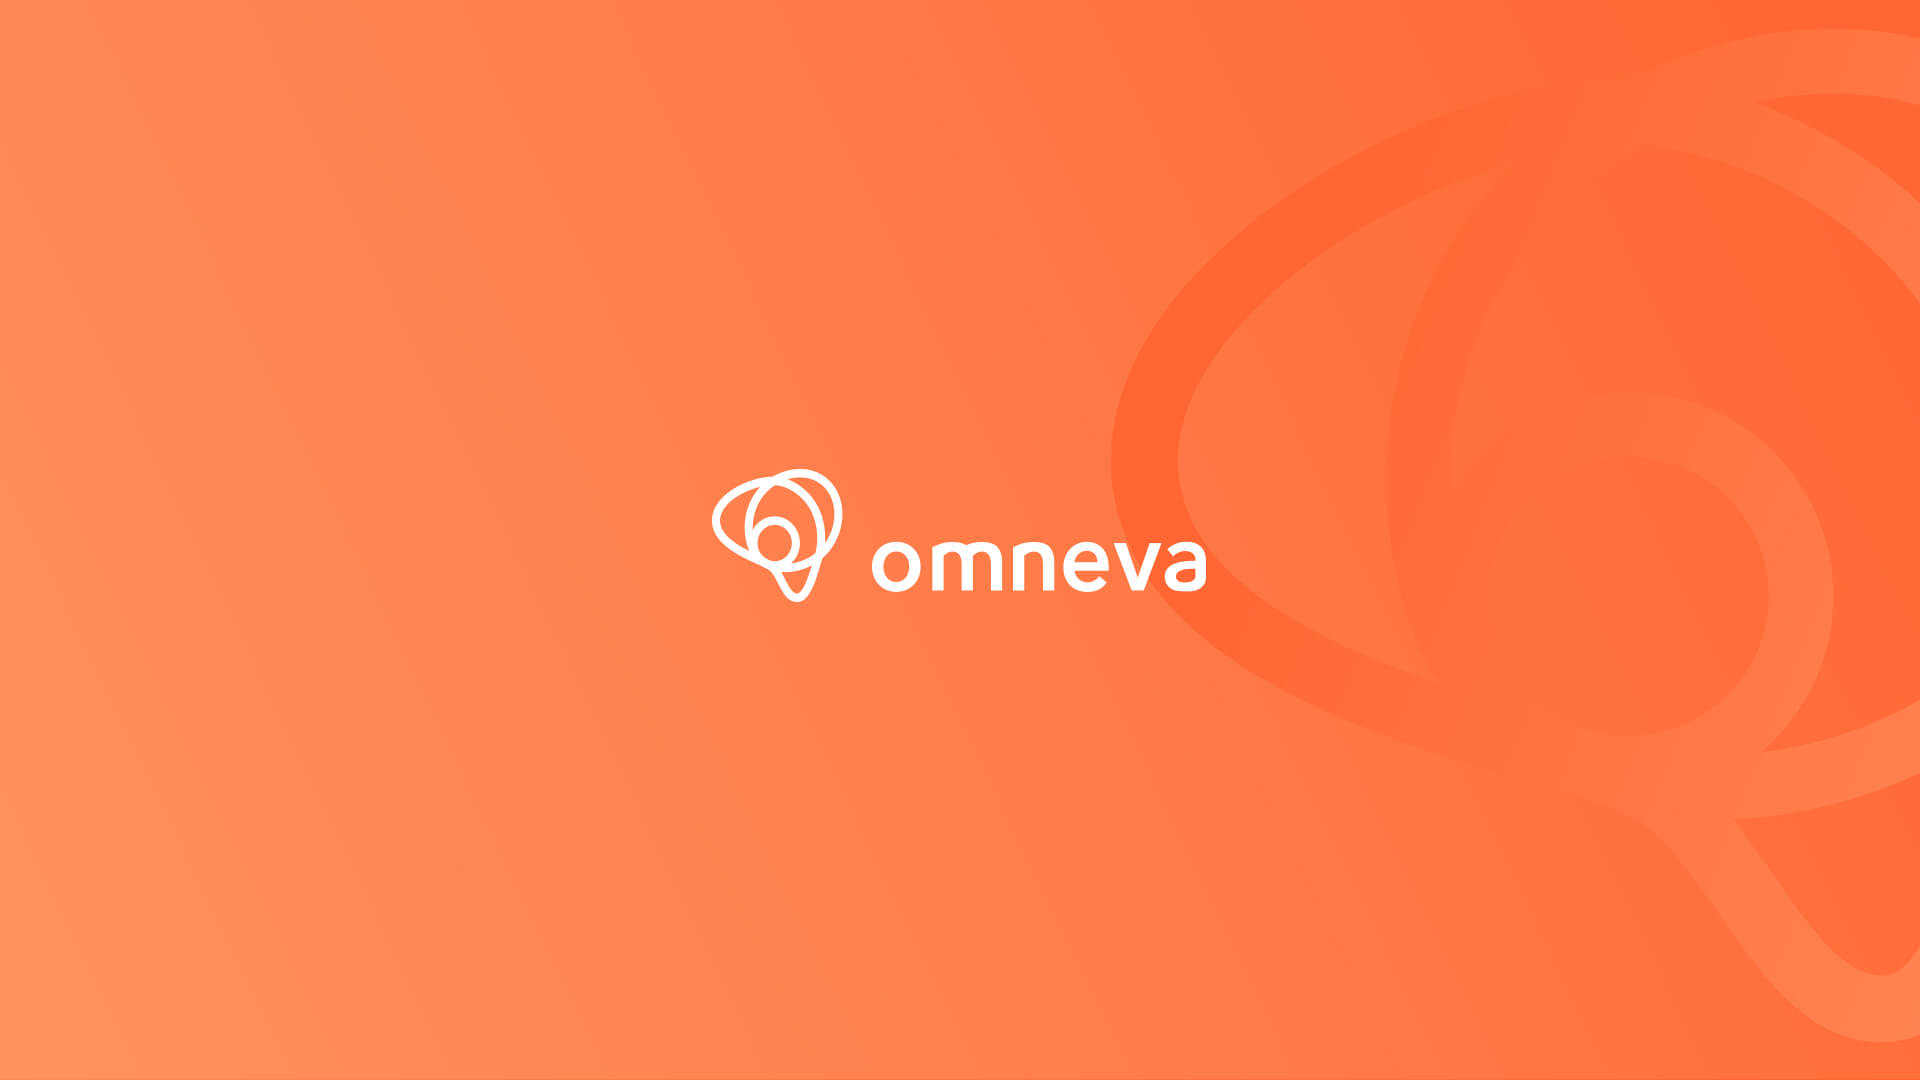 Omneva Logo on an orange Background